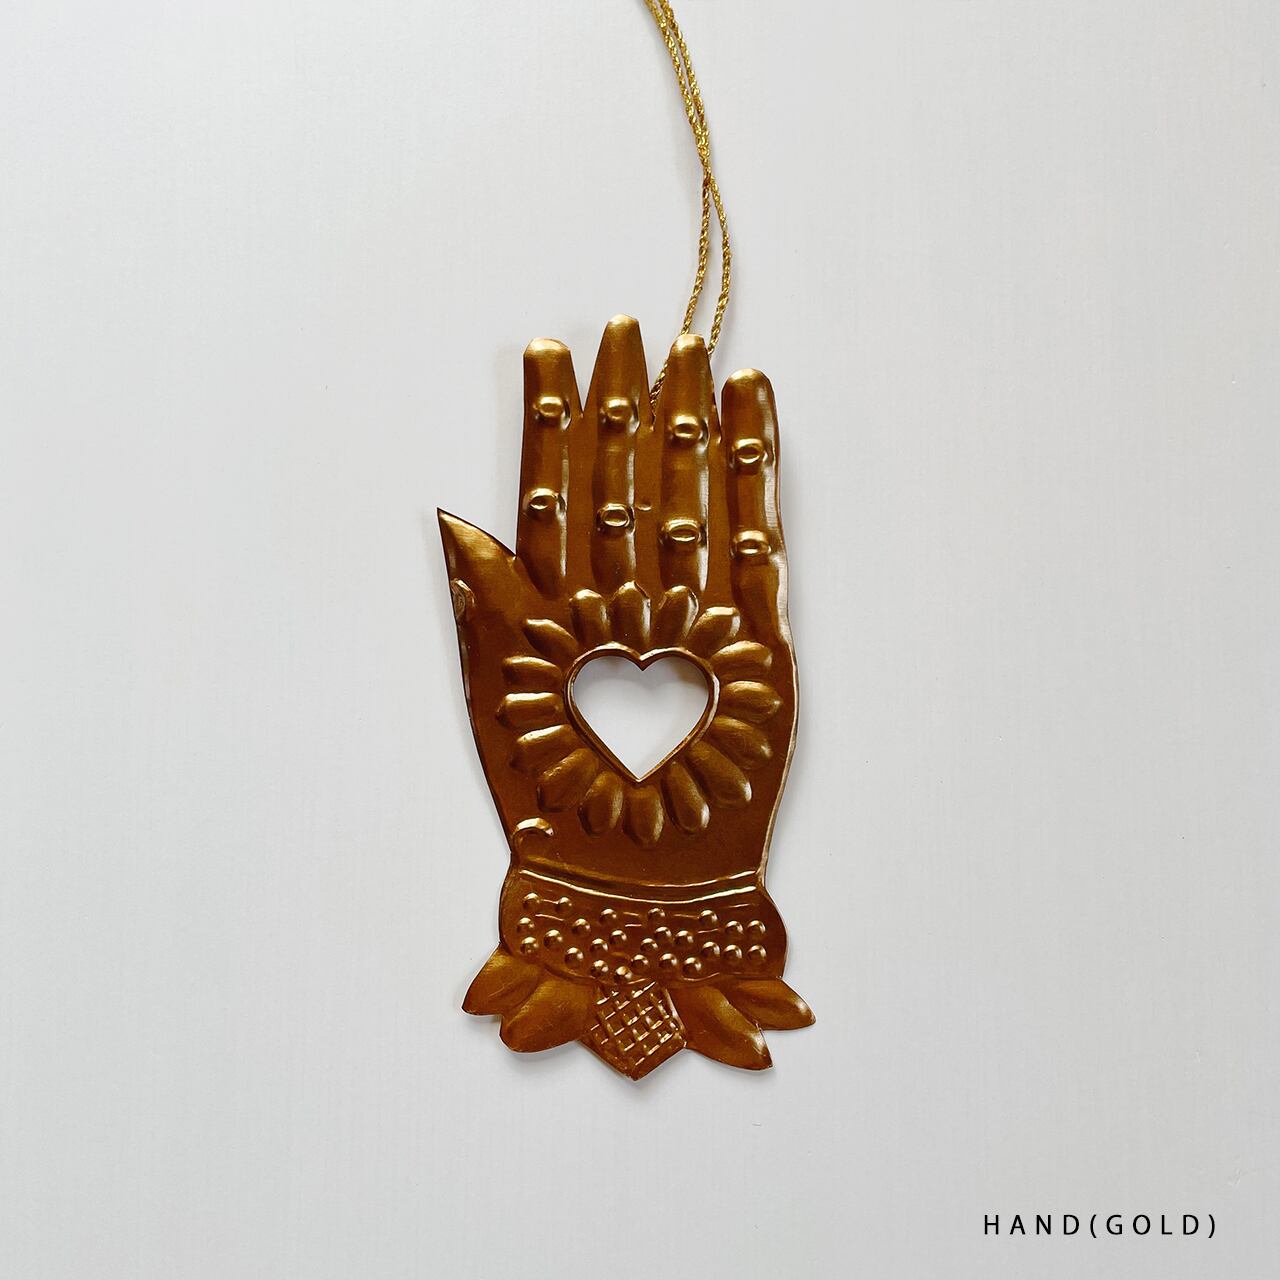 Iron ornament (hand)